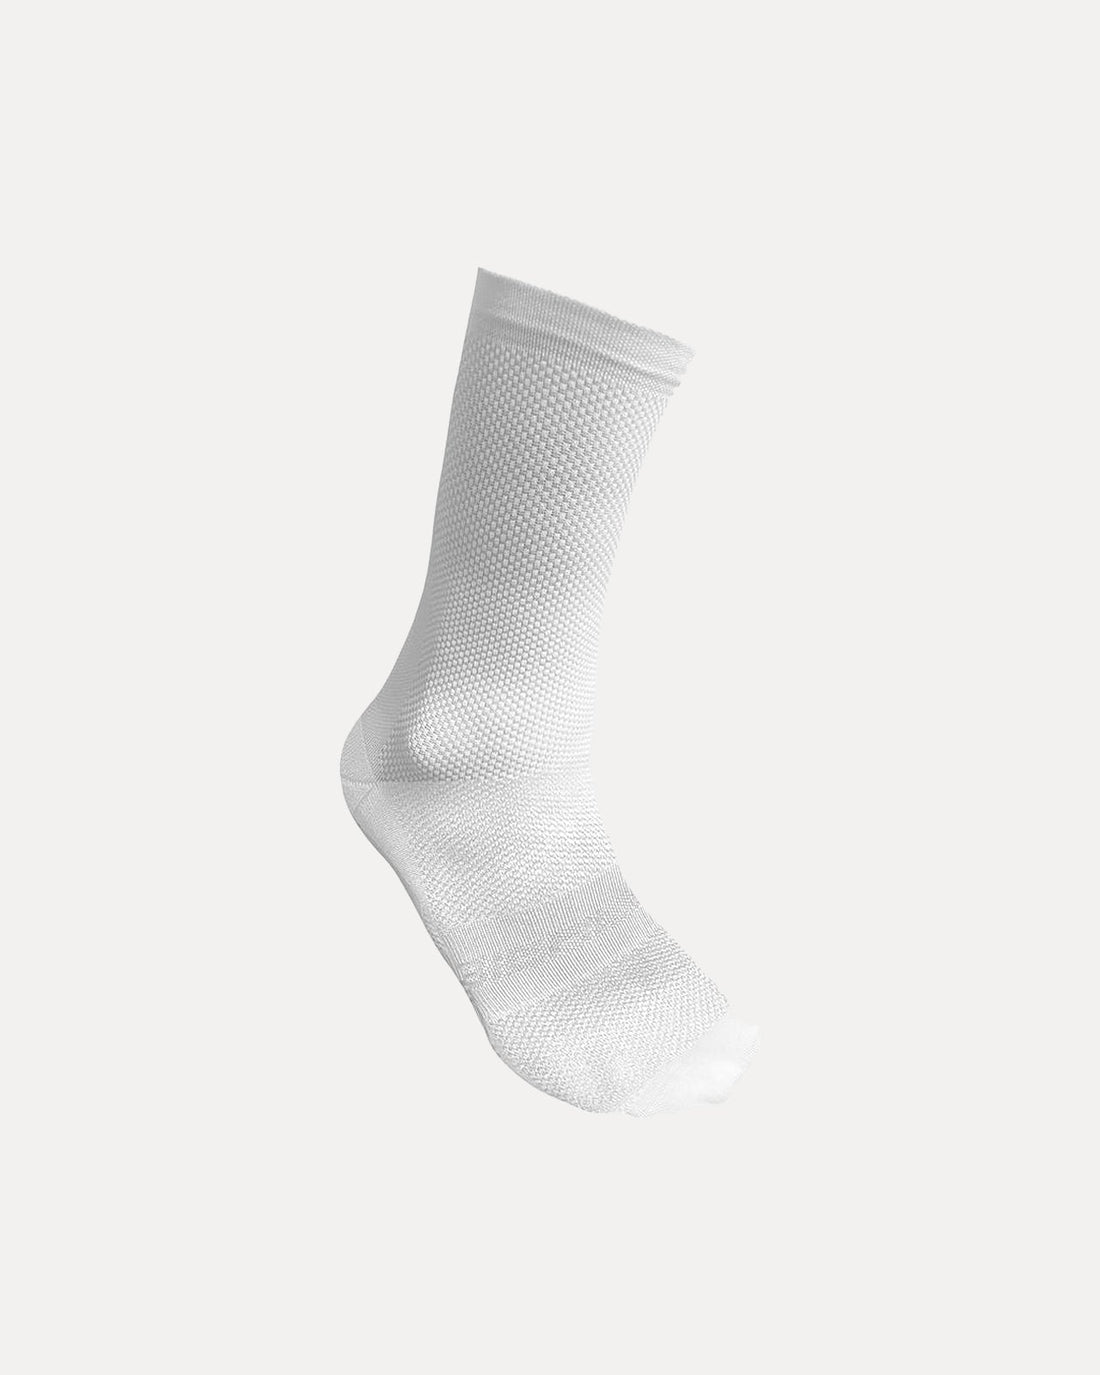 Statement Socks - White